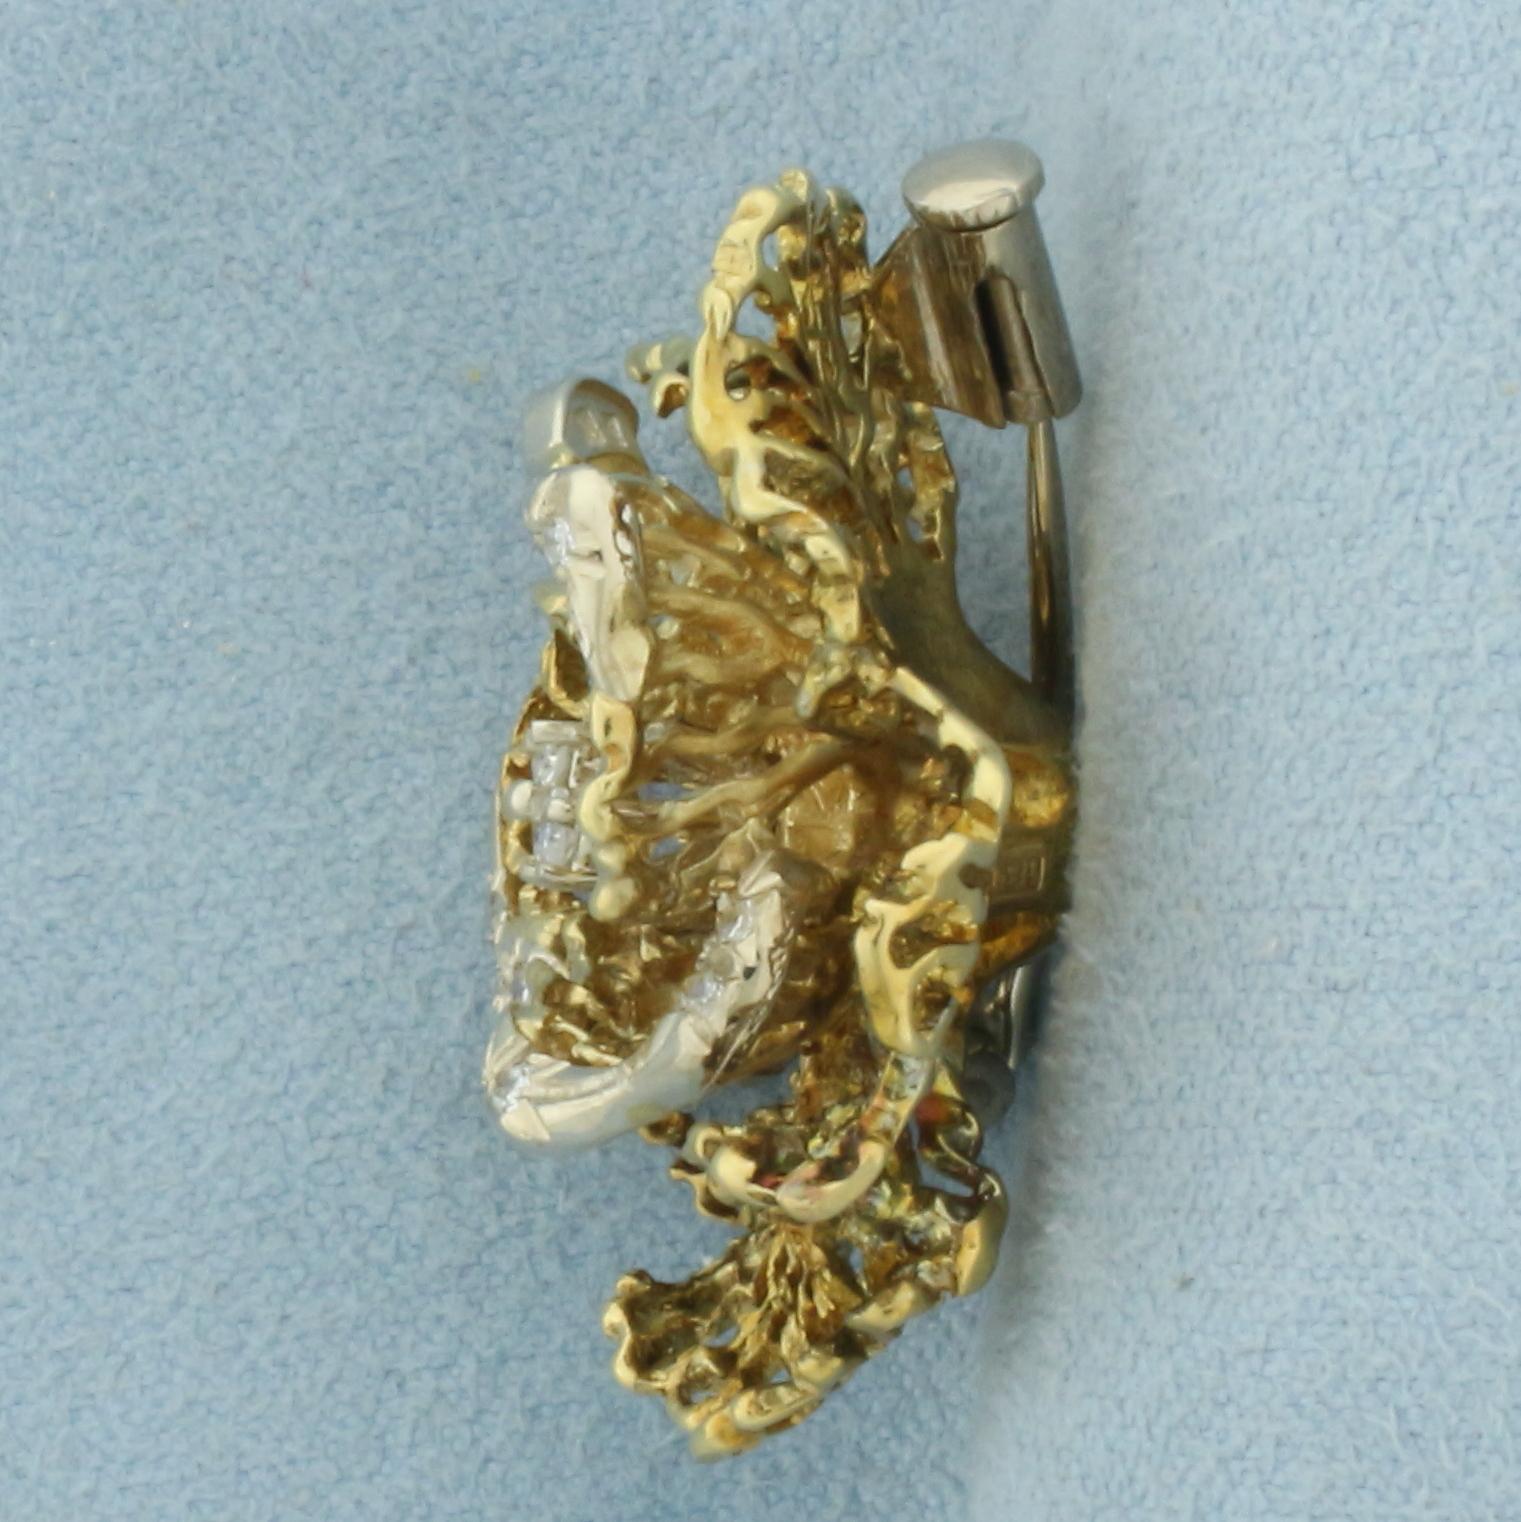 Italian Diamond Natural Freeform Flower Brooch Pin In 18k Yellow Gold